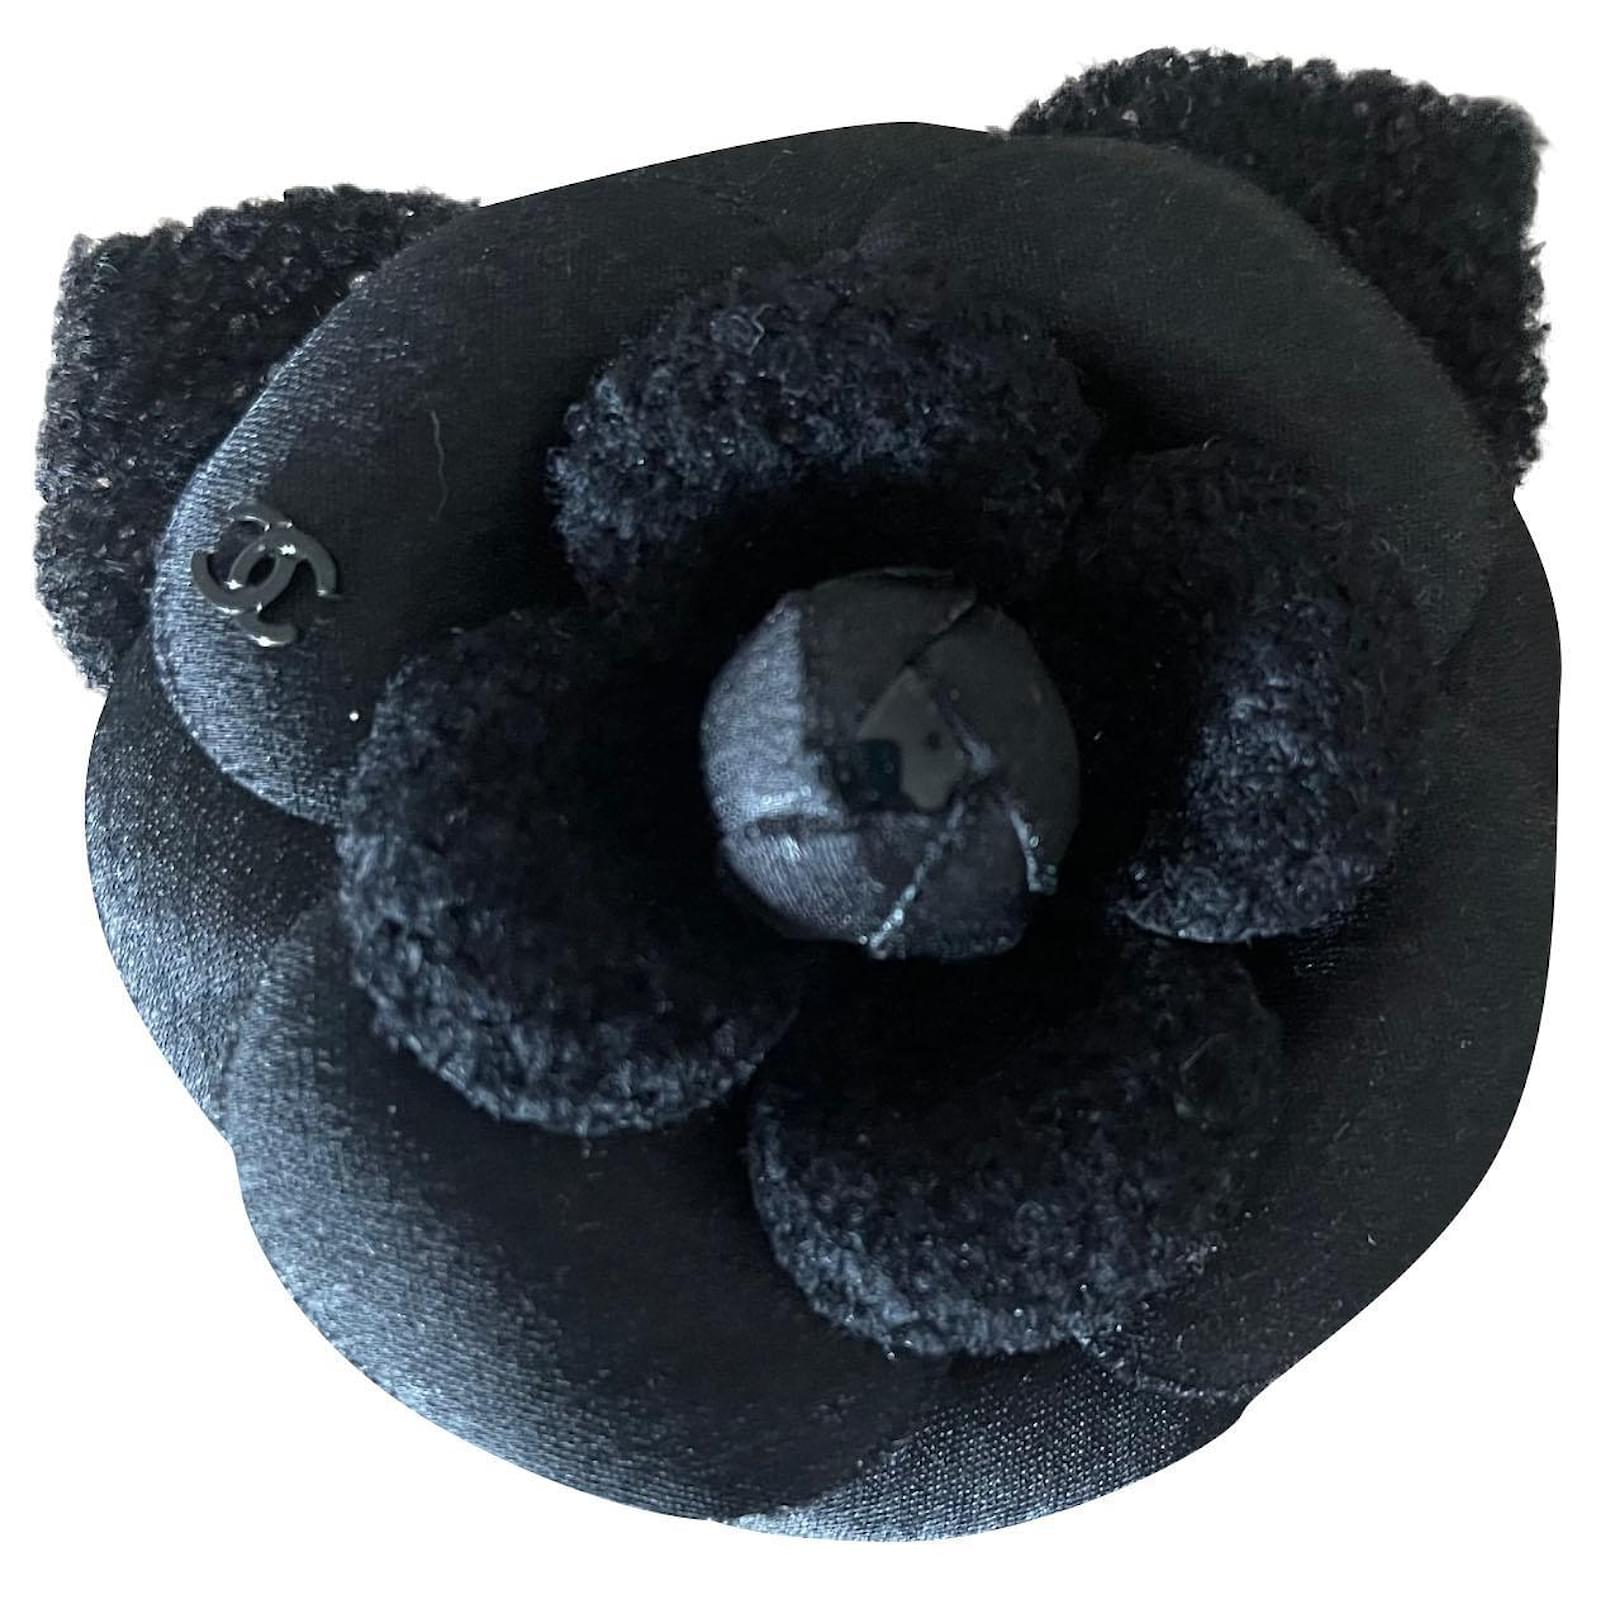 chanel black flower brooch